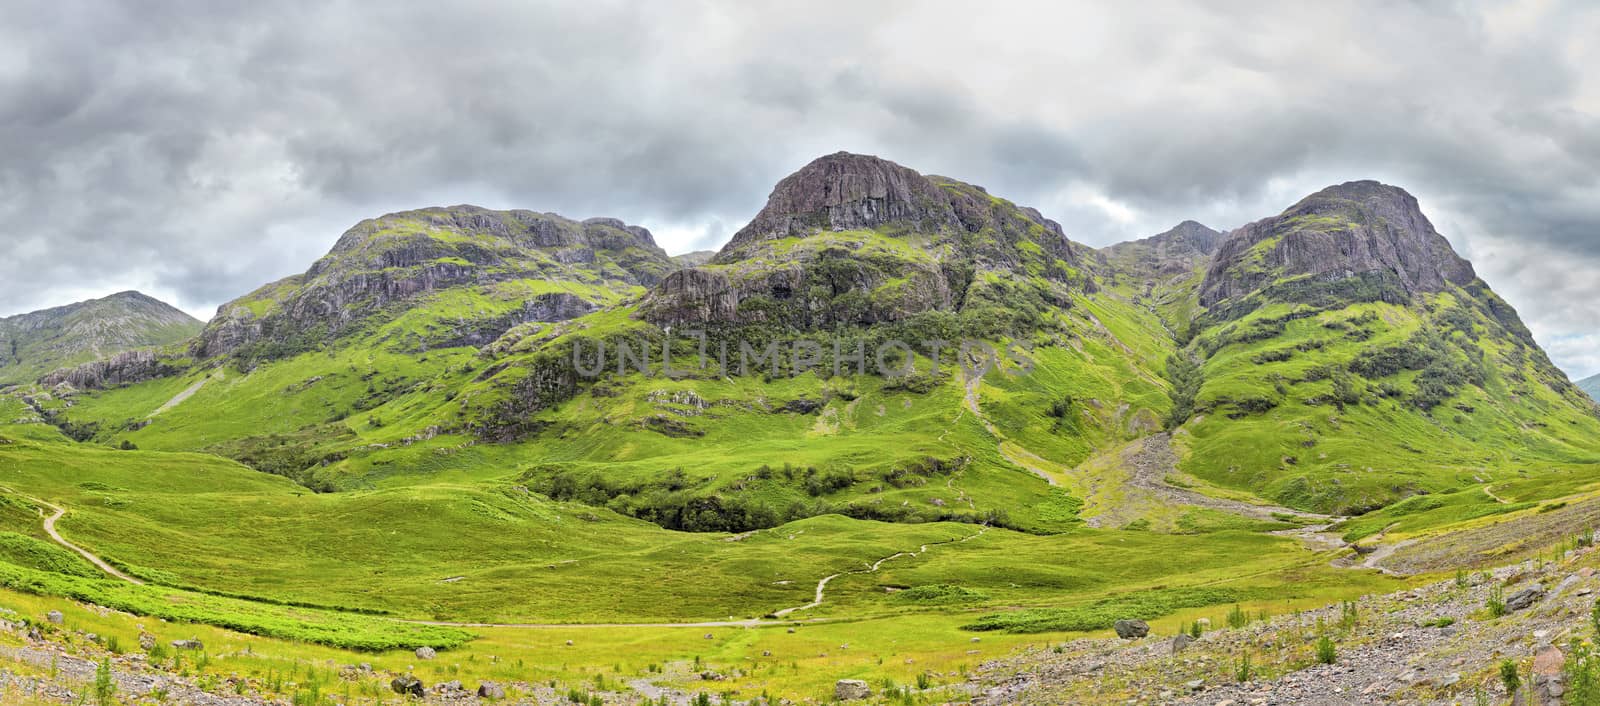 Three Sisters of Glencoe, Scotland by zhu_zhu